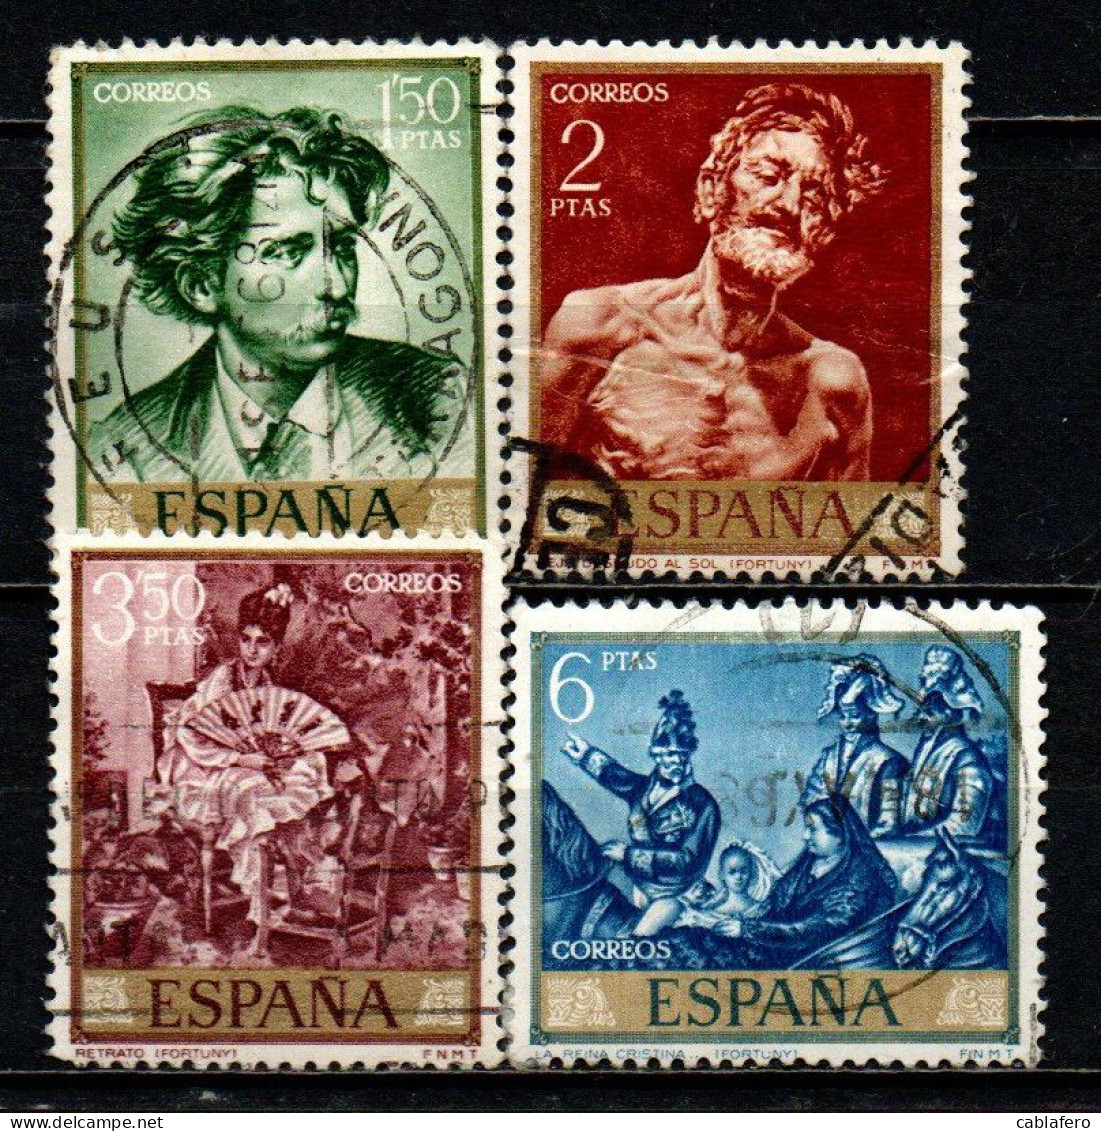 SPAGNA - 1968 - DIPINTI DI MARIANO FORTUNY MARSAL - USATI - Gebruikt